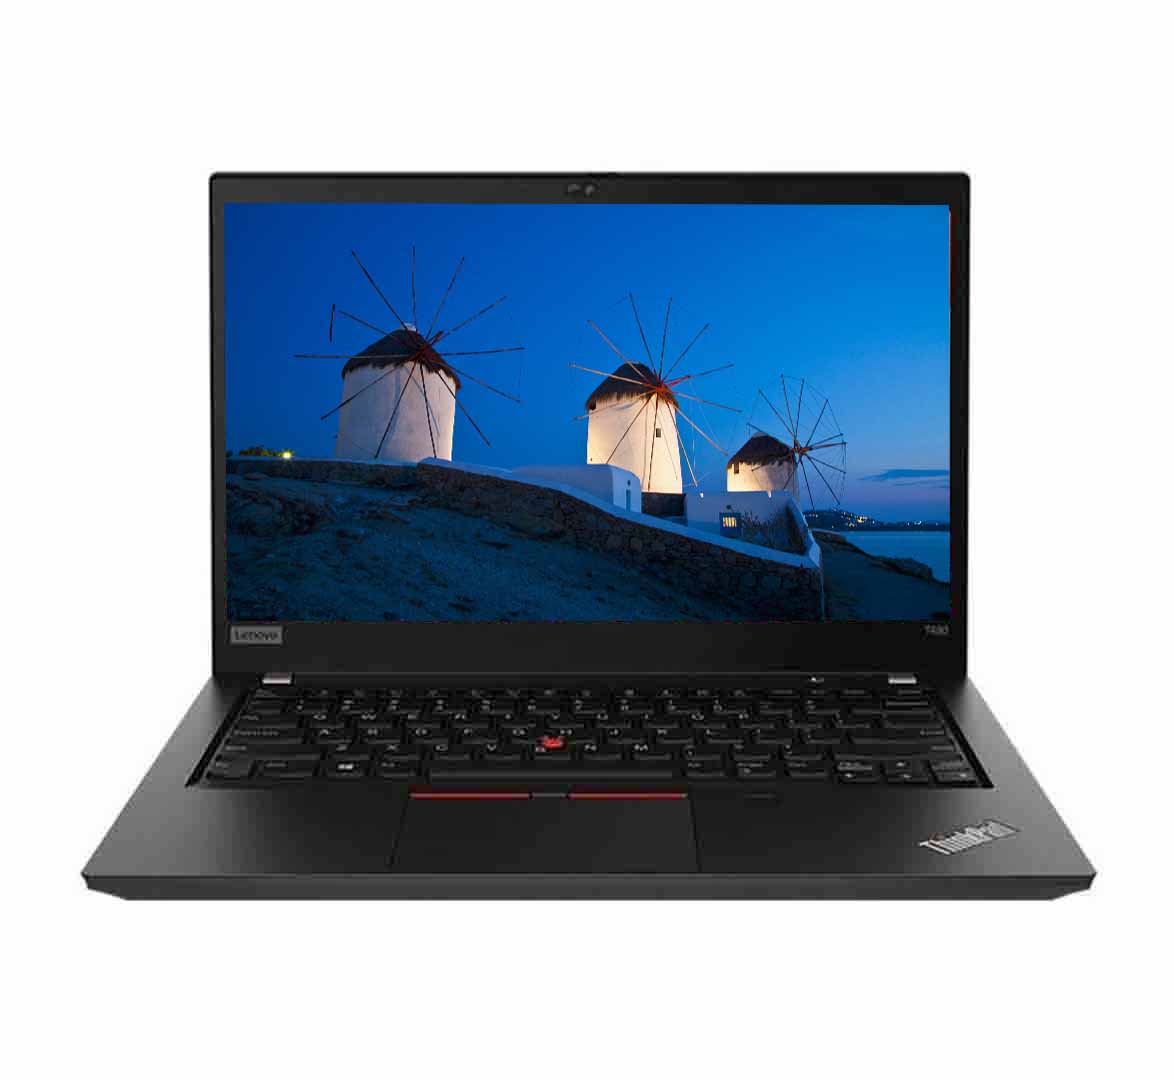 Lenovo ThinkPad T490s Business Laptop, Intel Core i7-8th Generation CPU, 16GB RAM, 512GB SSD, 14 inch Display, Windows 10 Pro, Refurbished Laptop